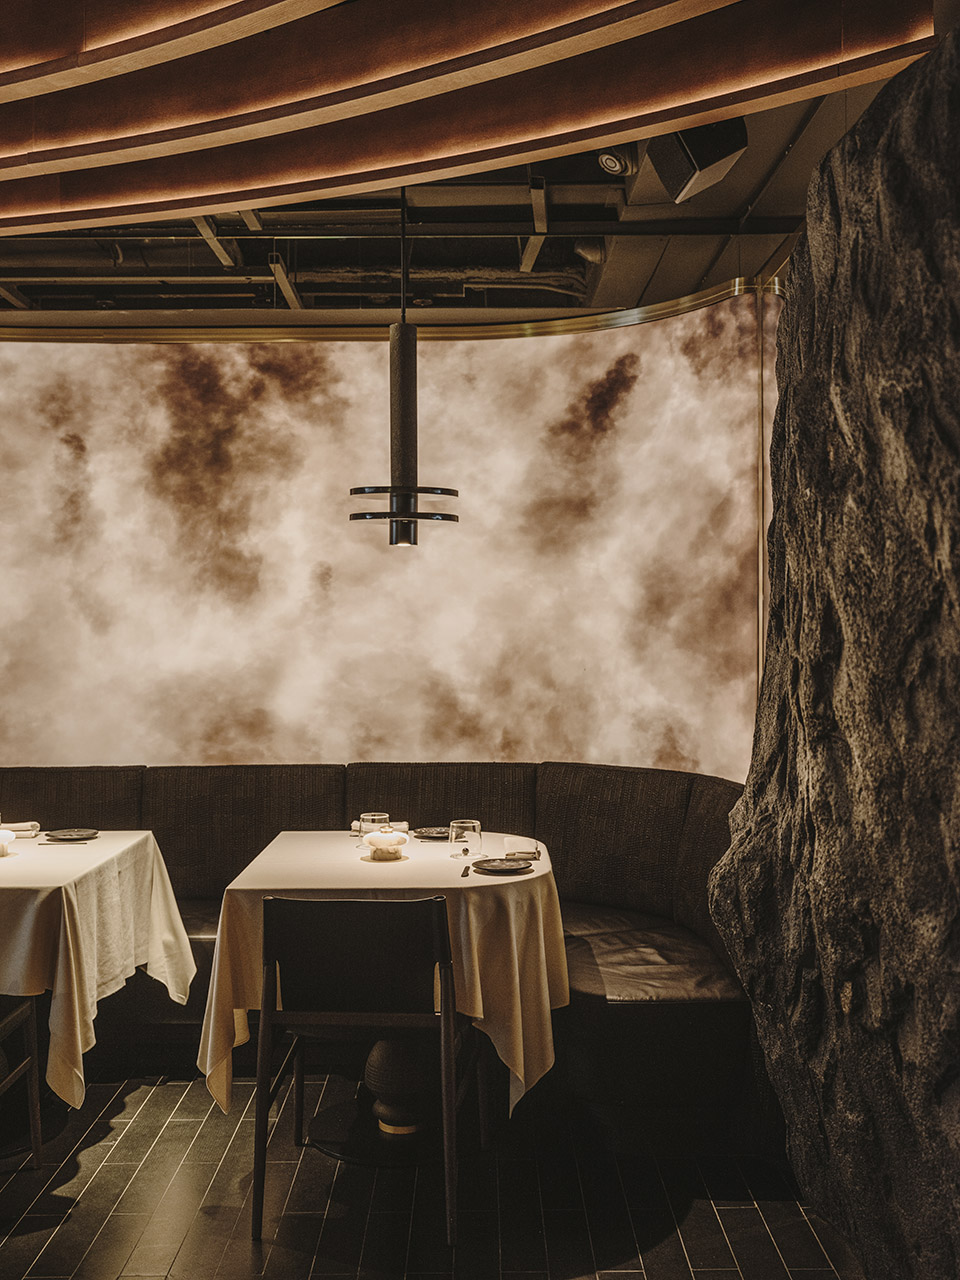 Leña餐厅，西班牙/木头、石头和炭火，提取最原始的烹饪精髓-27